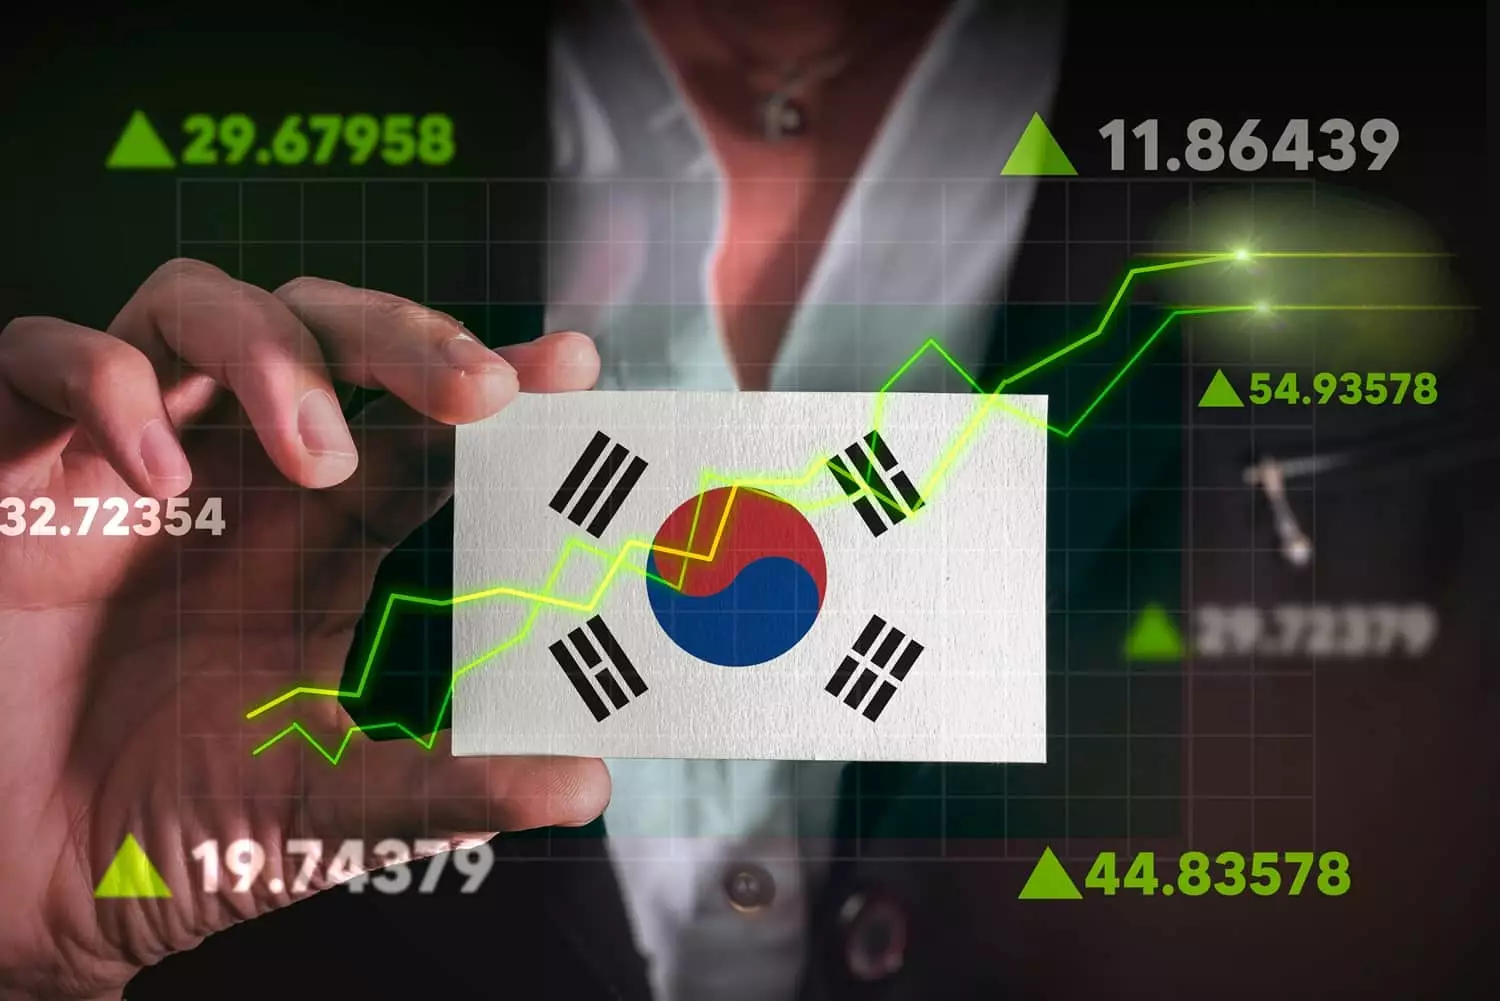 South Korean Crypto Stocks Surge After SEC Approves Bitcoin ETFs